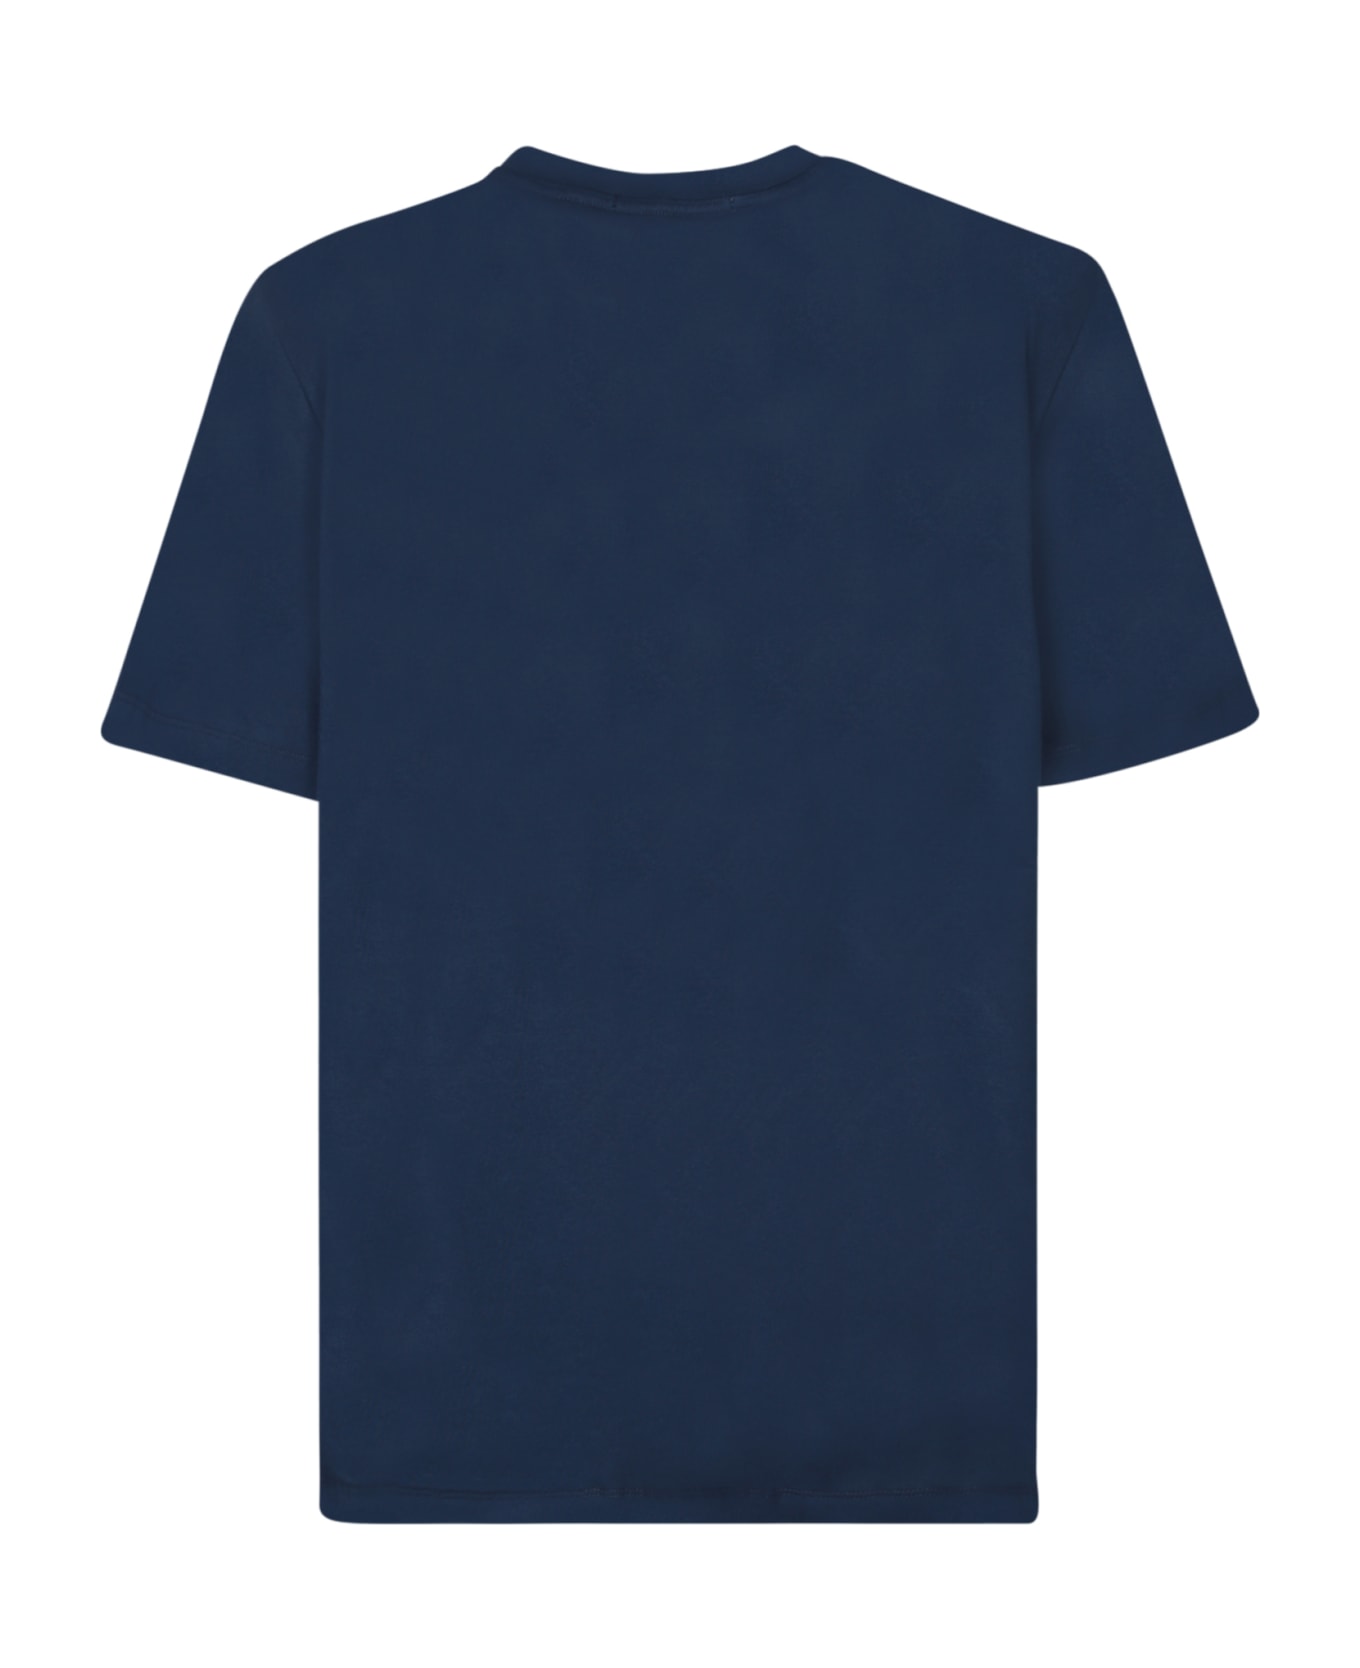 MSGM Micro Logo Blue T-shirt - Blue